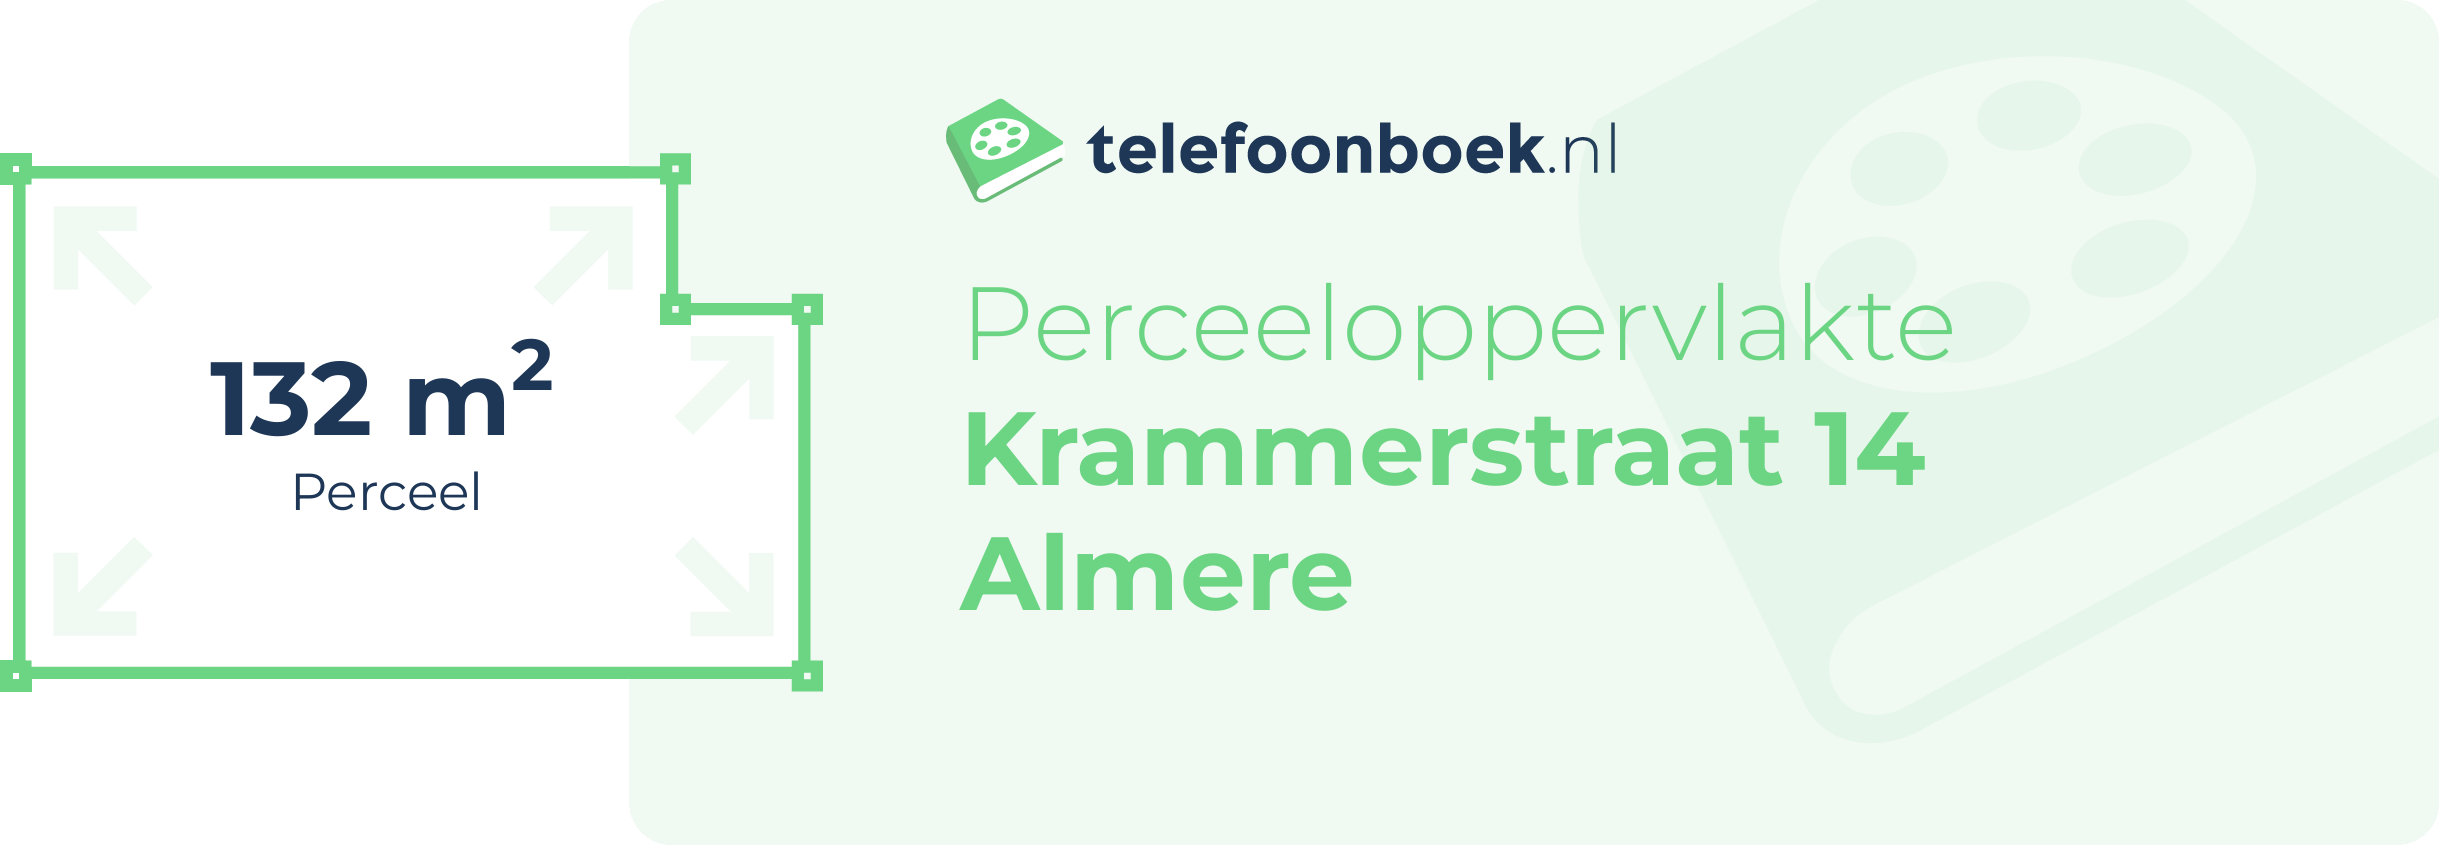 Perceeloppervlakte Krammerstraat 14 Almere